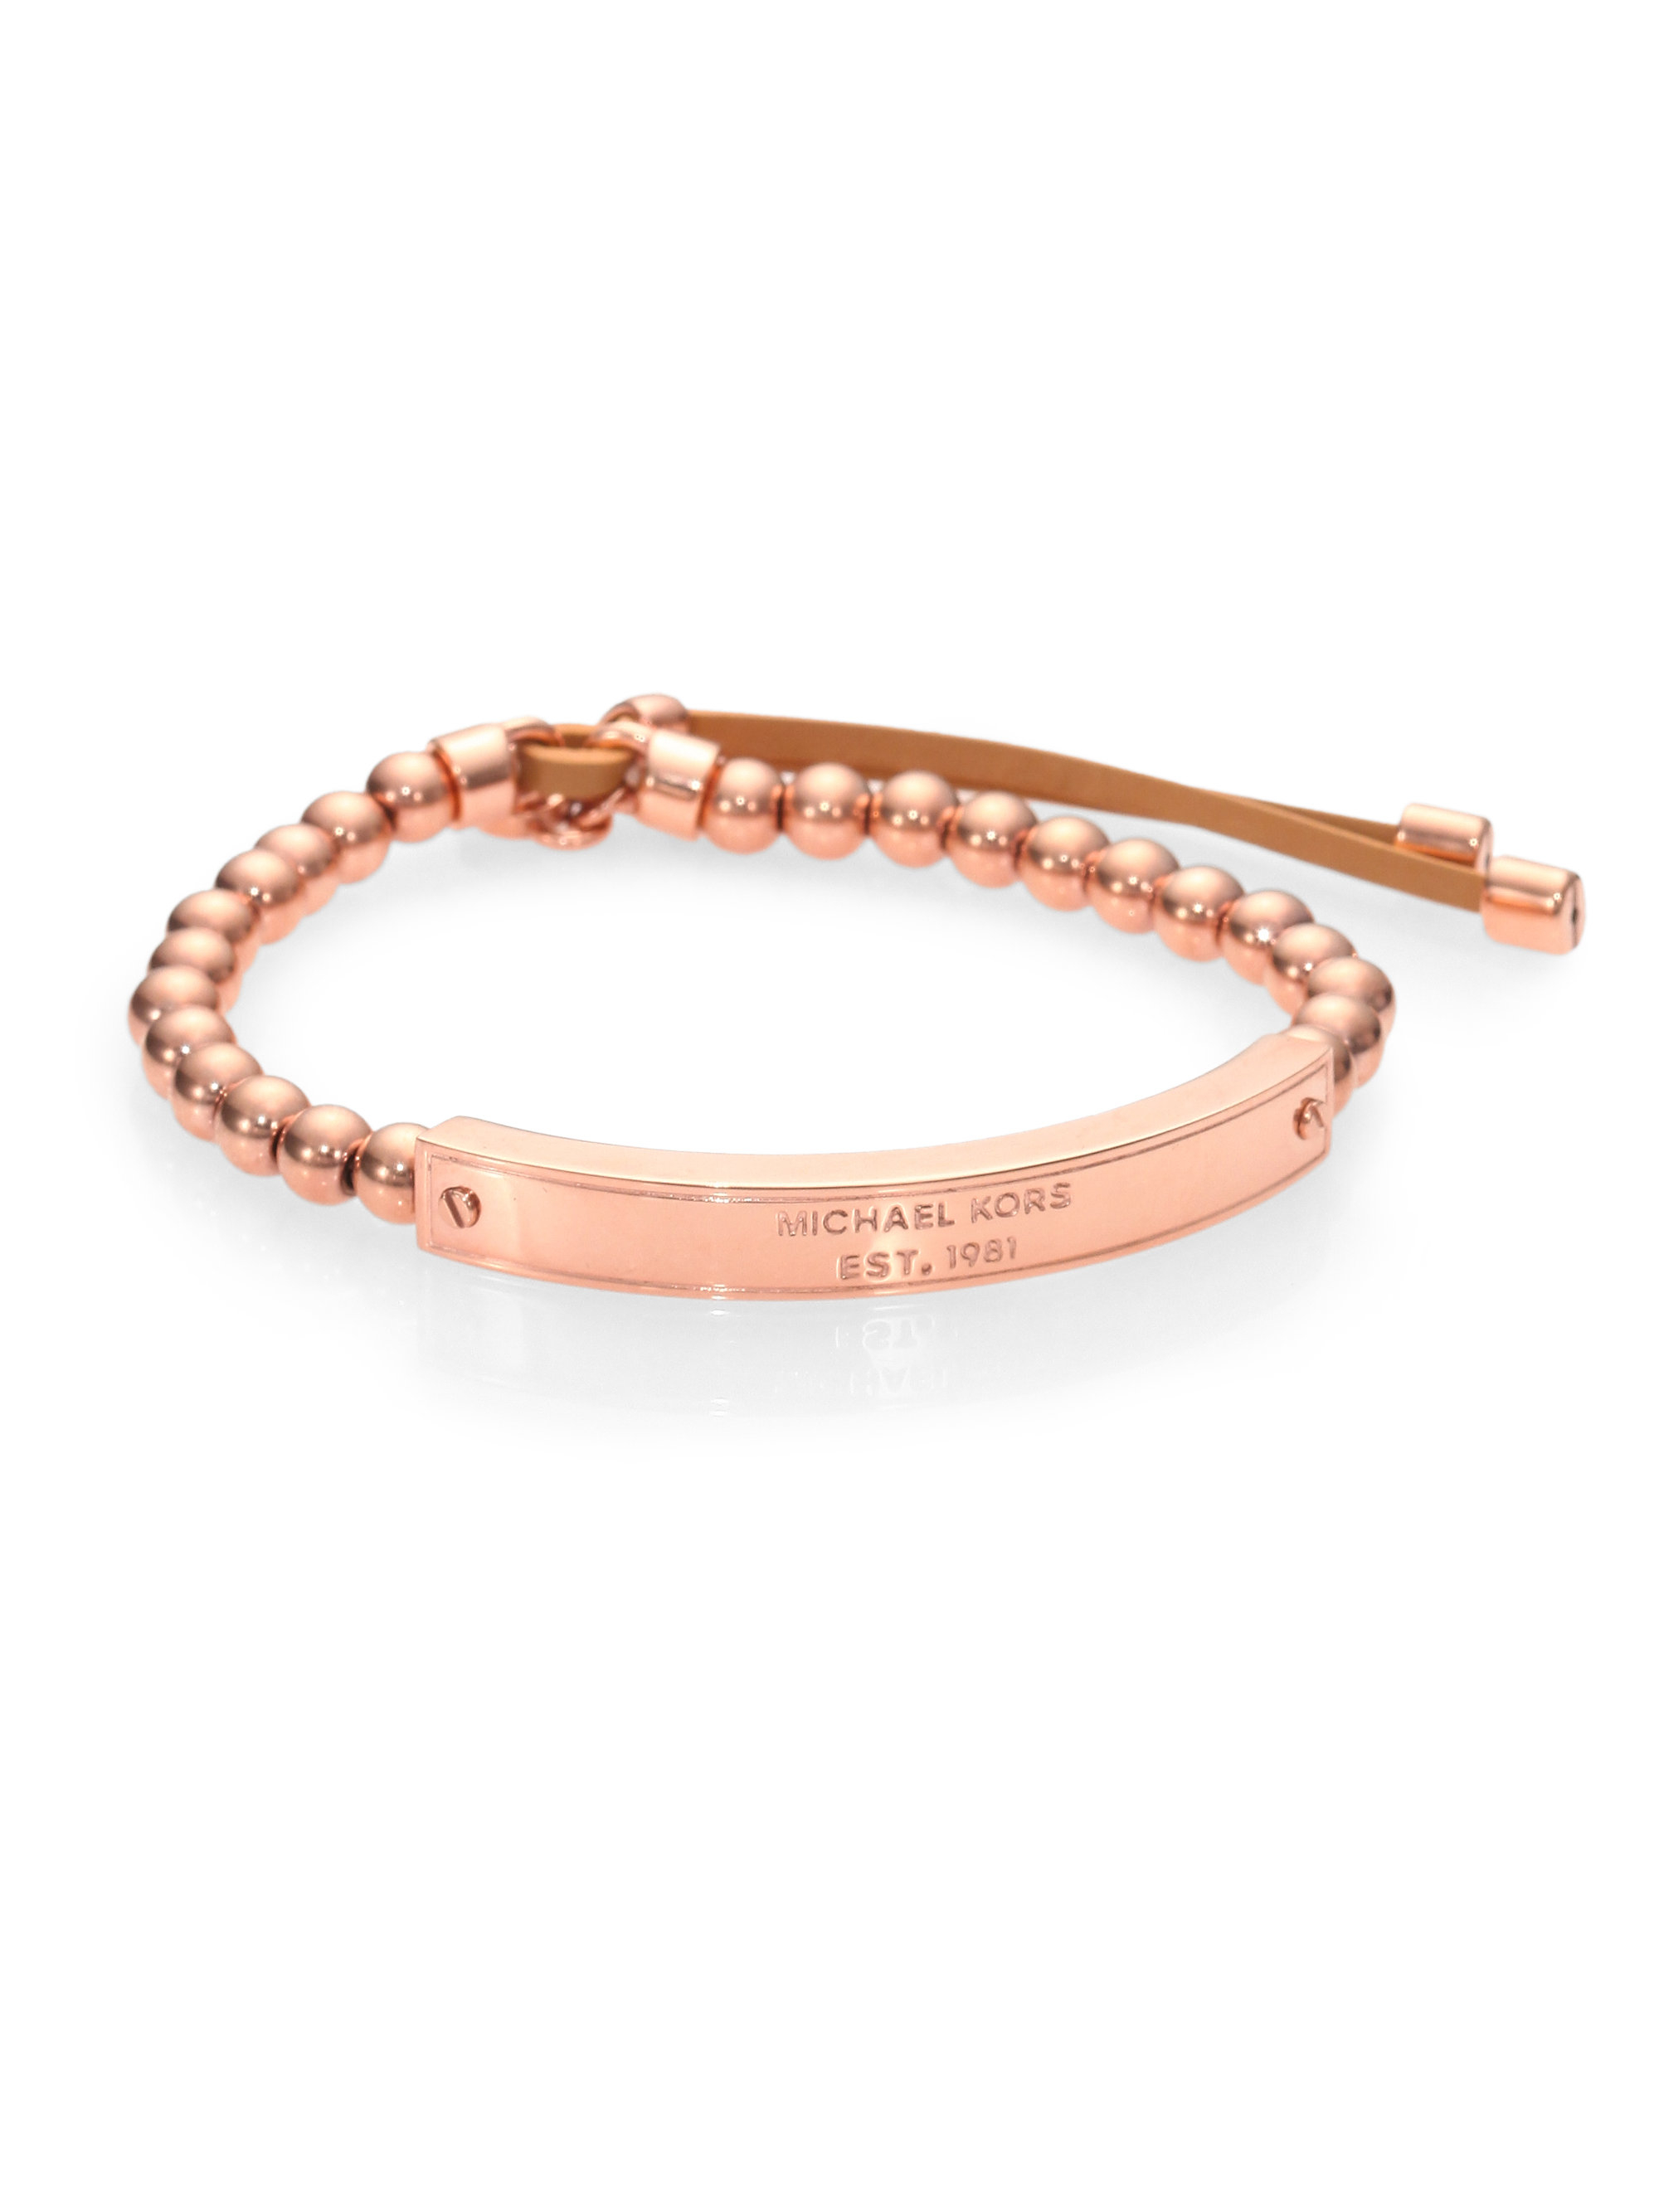 Photos of Michael Kors Pink Gold Bracelet